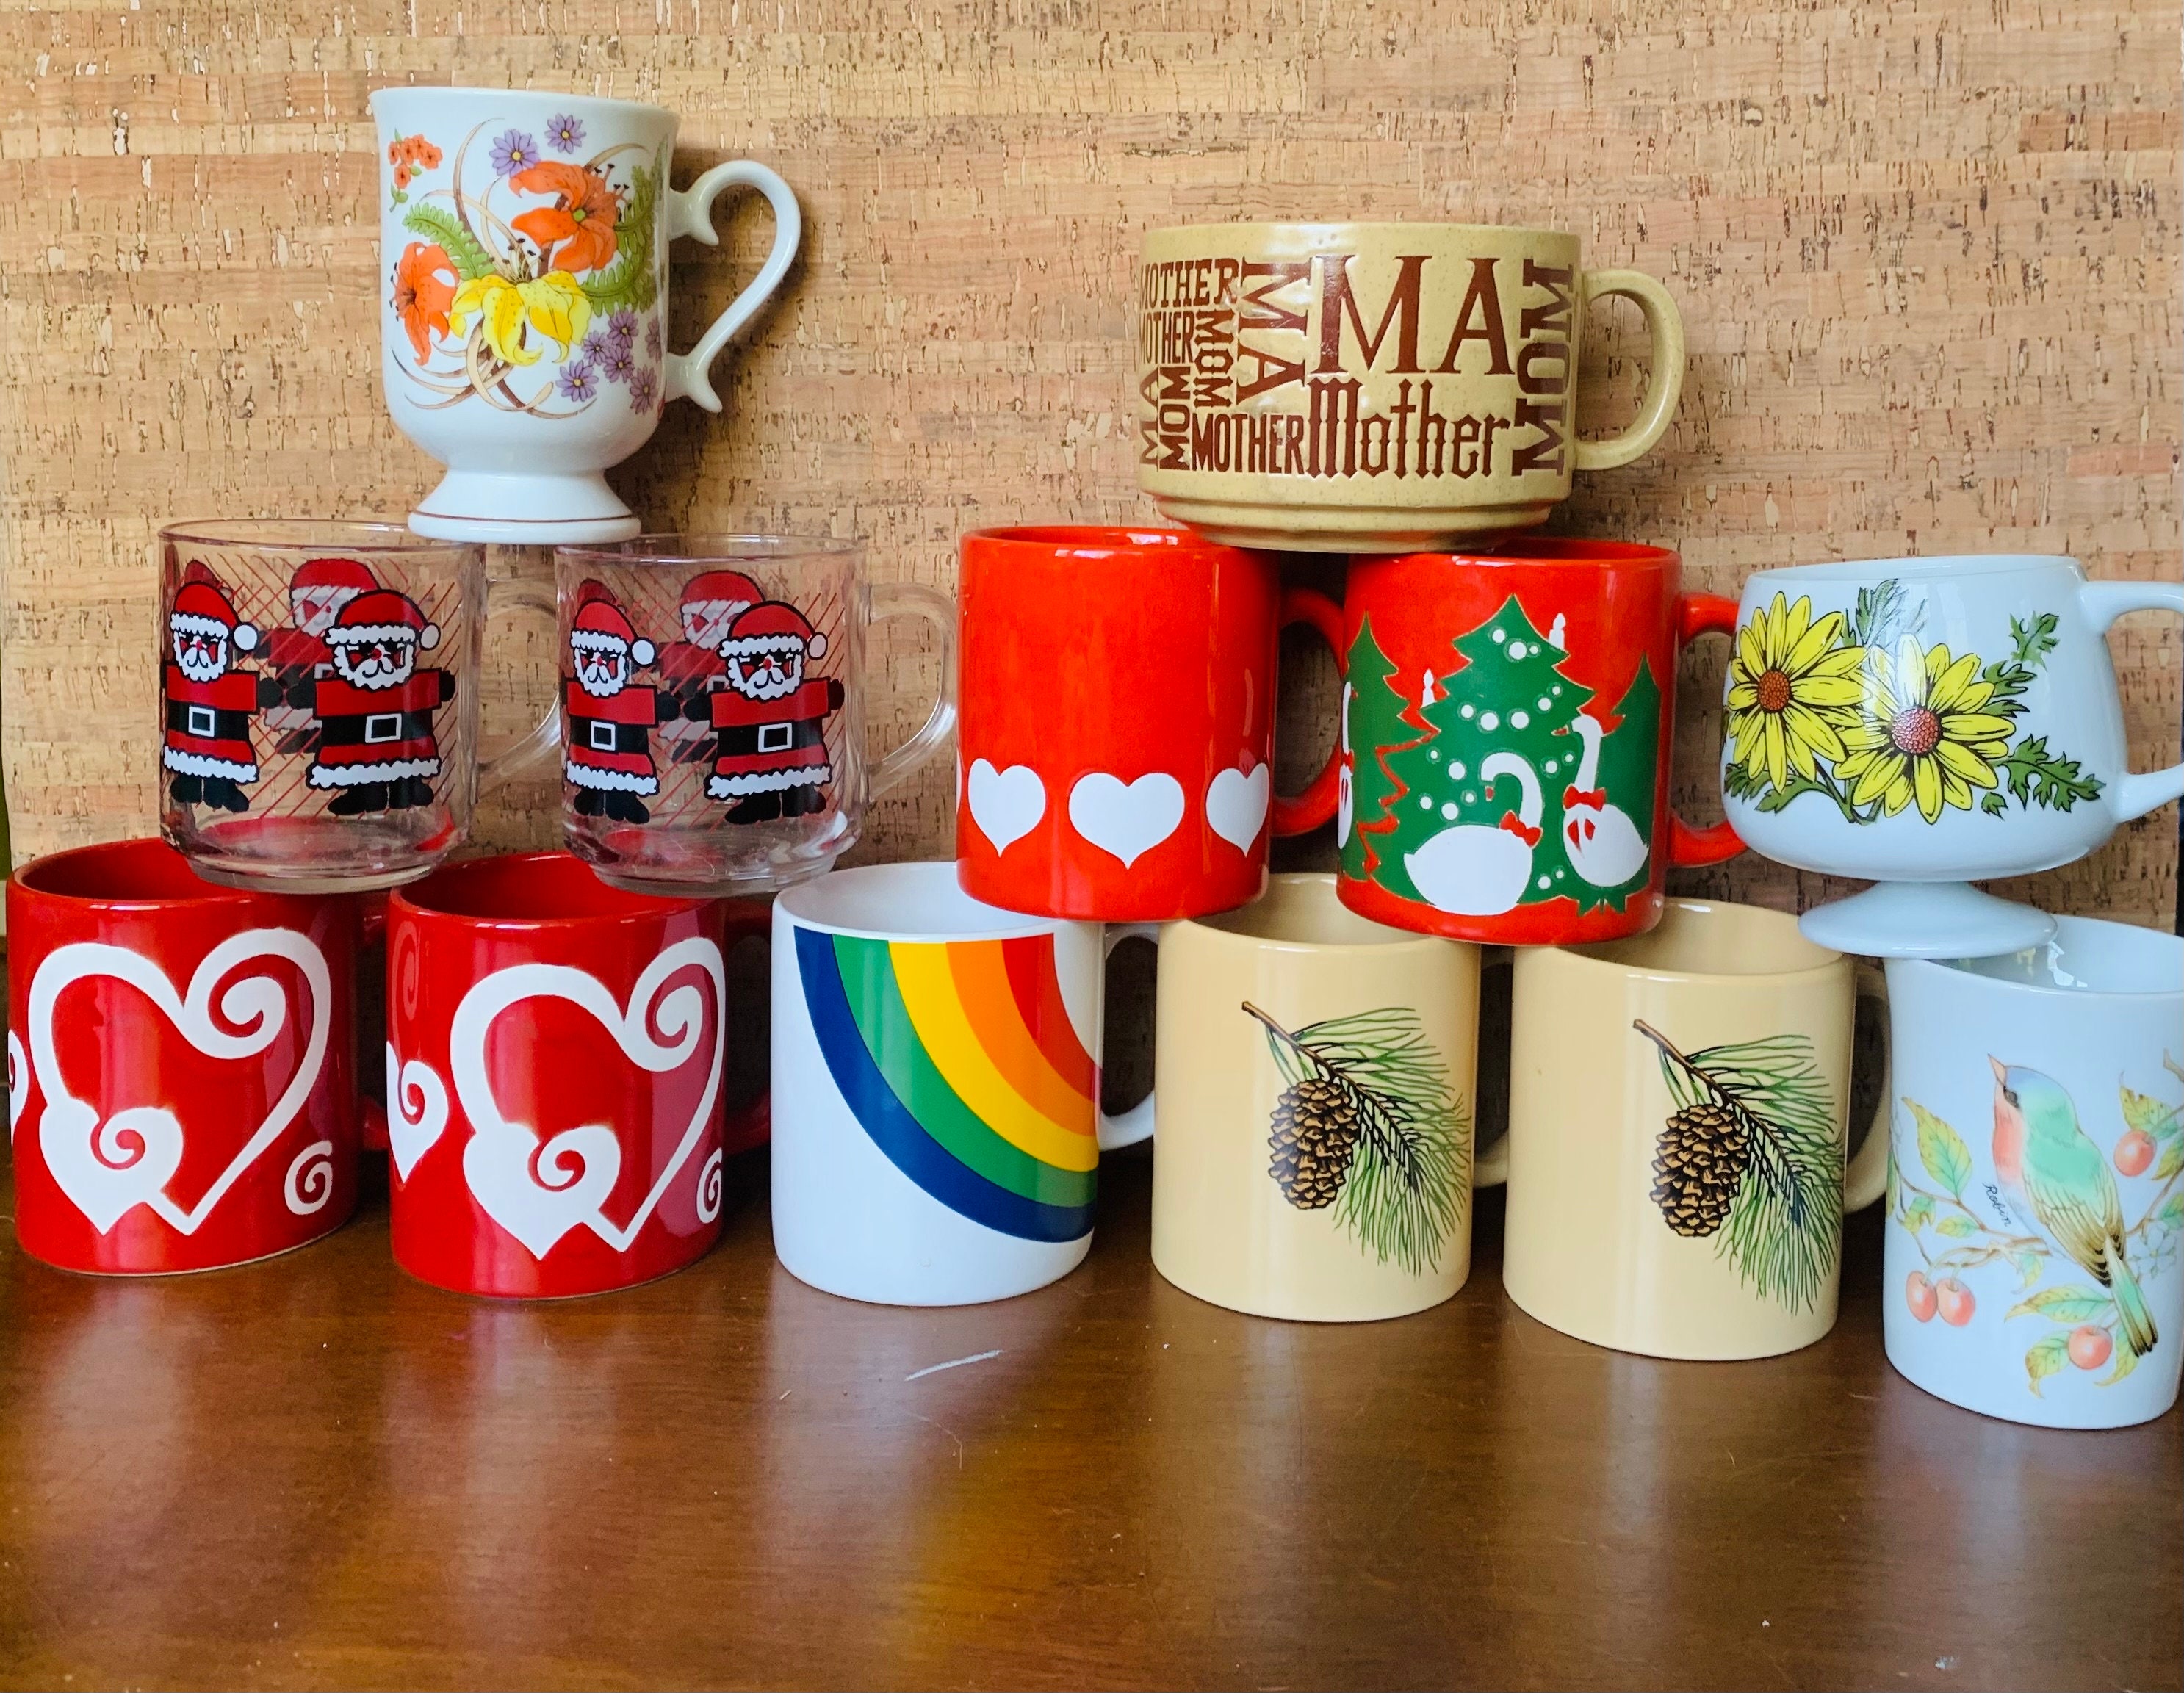 Vintage Rainbow Man Mug With 12 Crayons and Straw Included by Giftco Inc,  Vintage Kids Rainbow Mug, Plastic Rainbow Mug, Kids Rainbow Cup -   Denmark